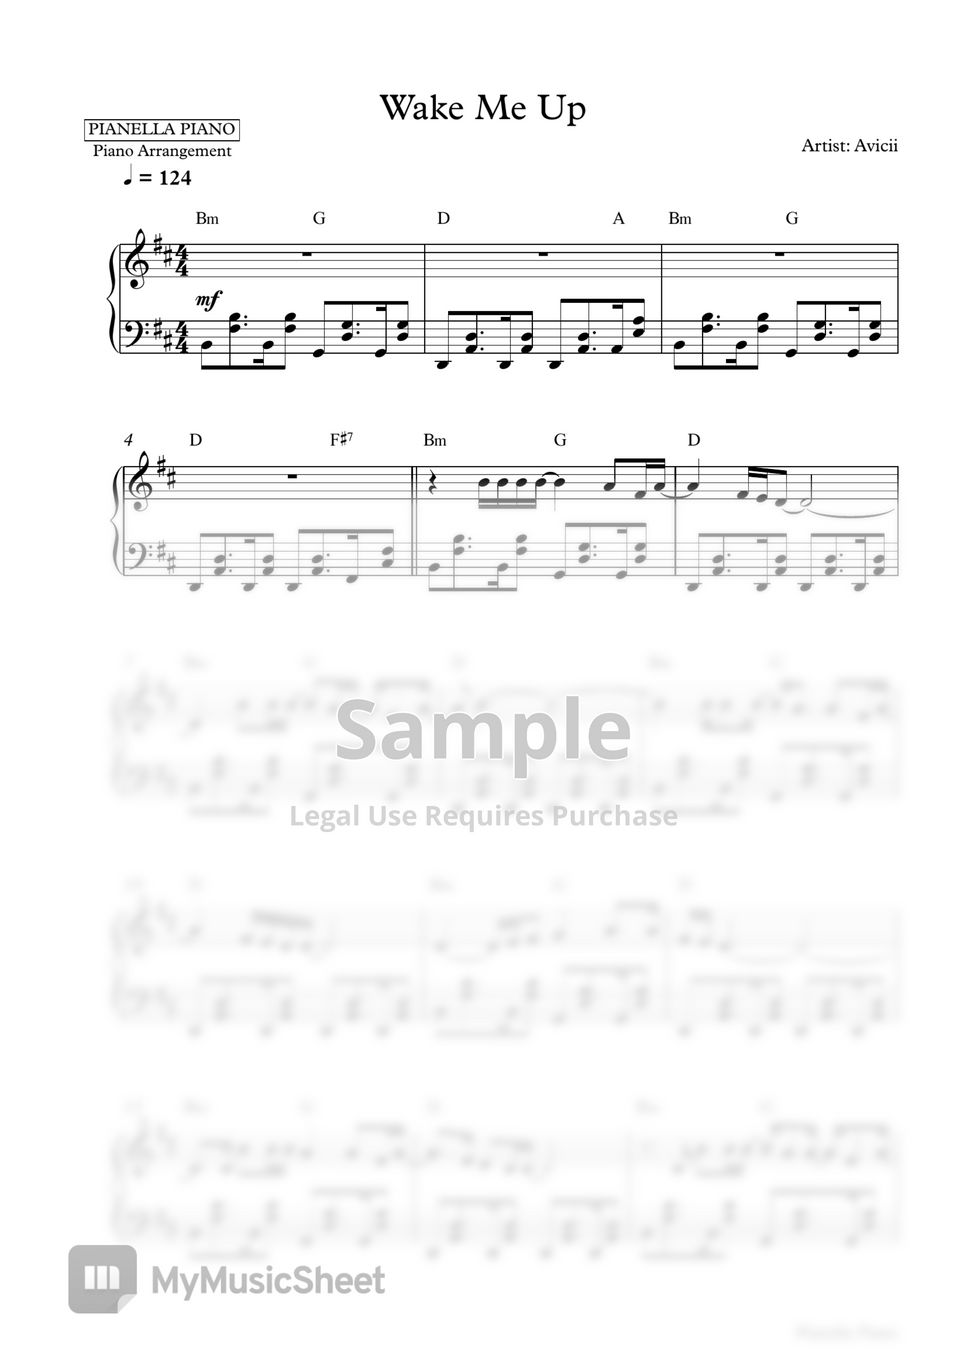 Avicii - Wake Me Up (Piano Sheet) by Pianella Piano